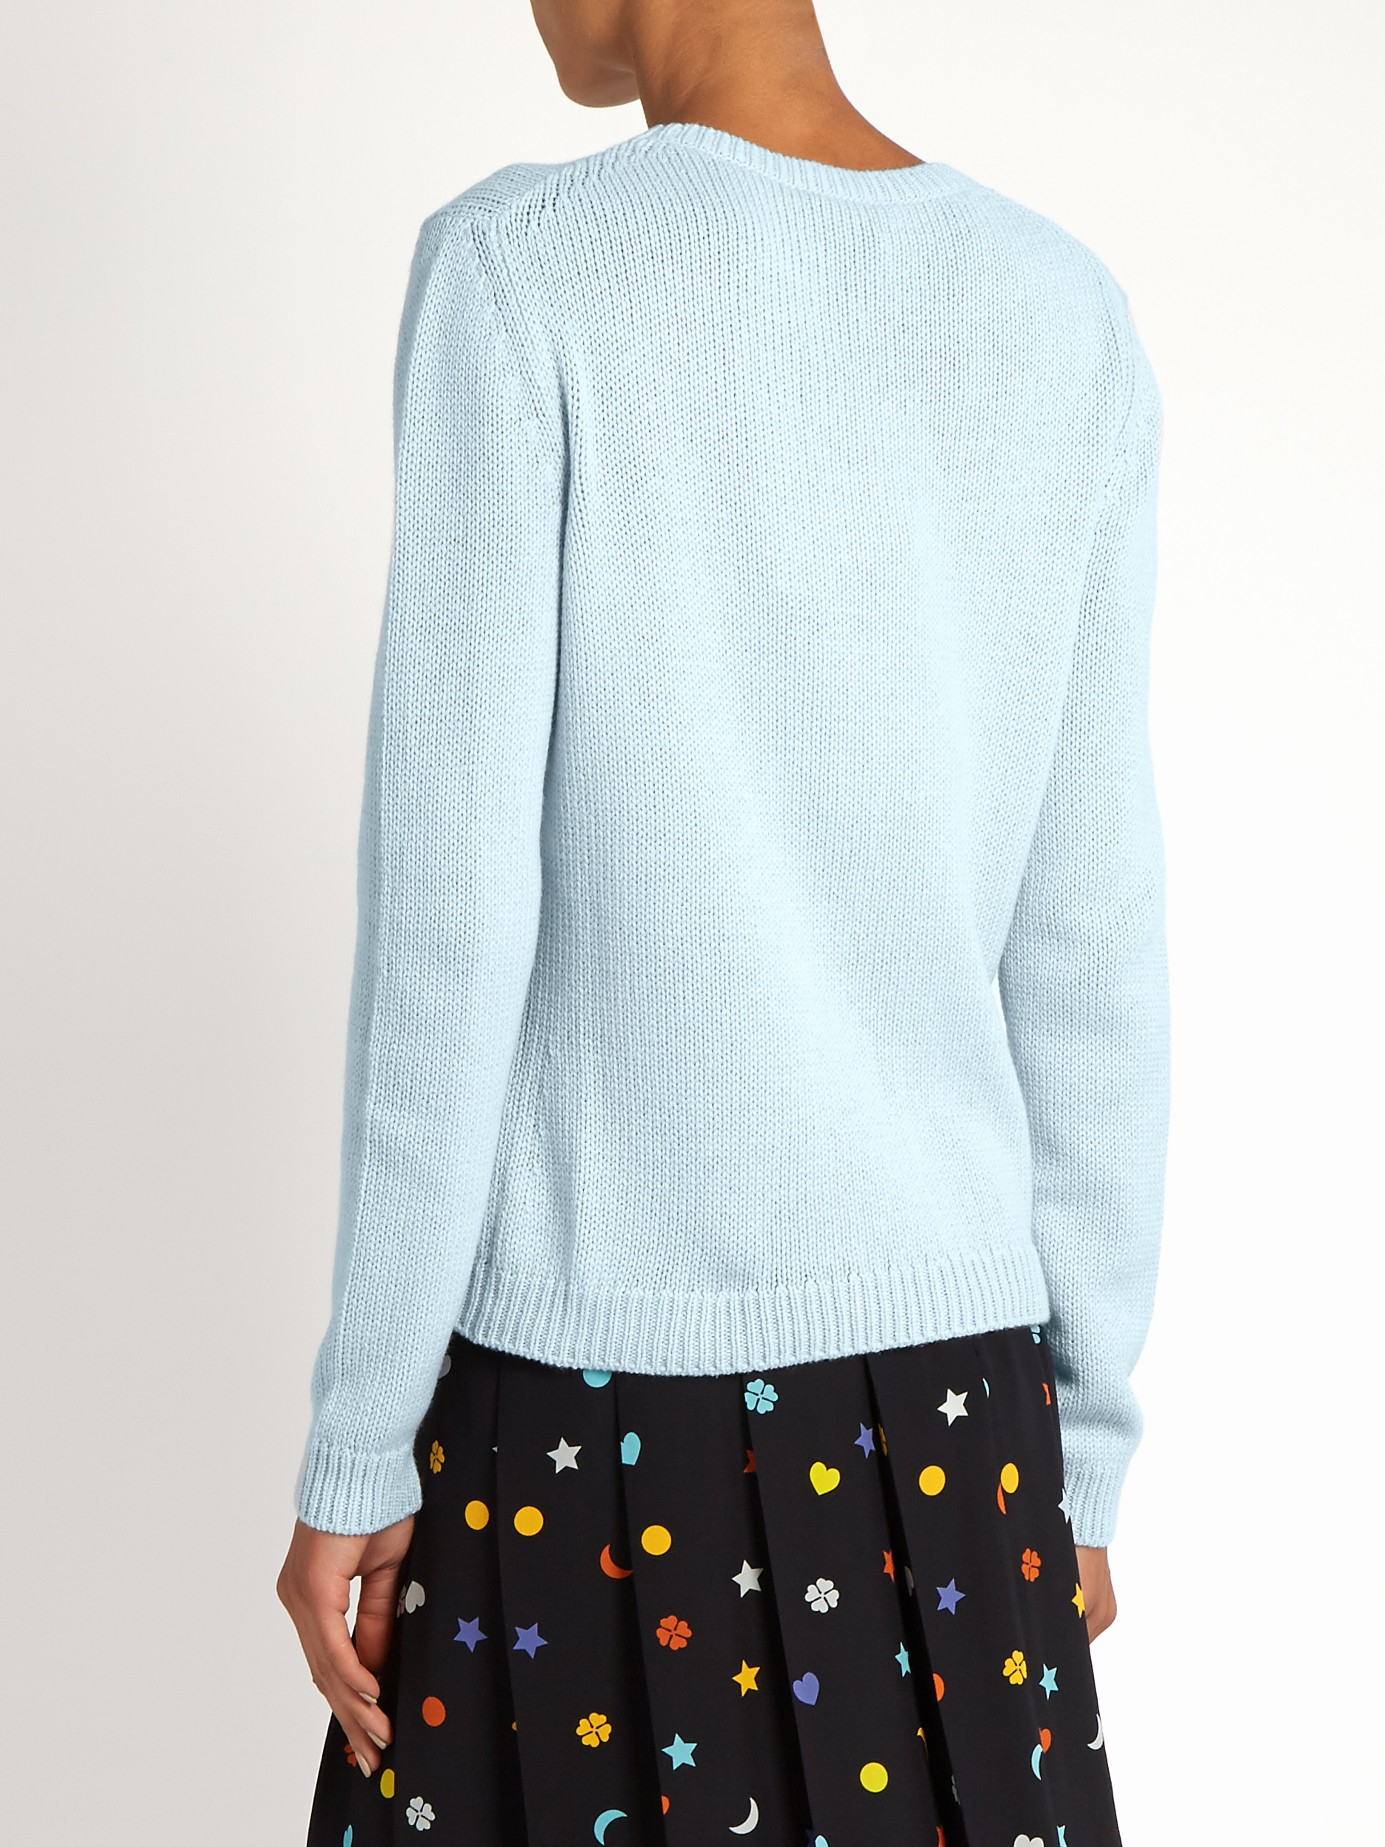 Miu Miu Floral-embellished Cashmere Sweater in Light Blue (Blue) - Lyst